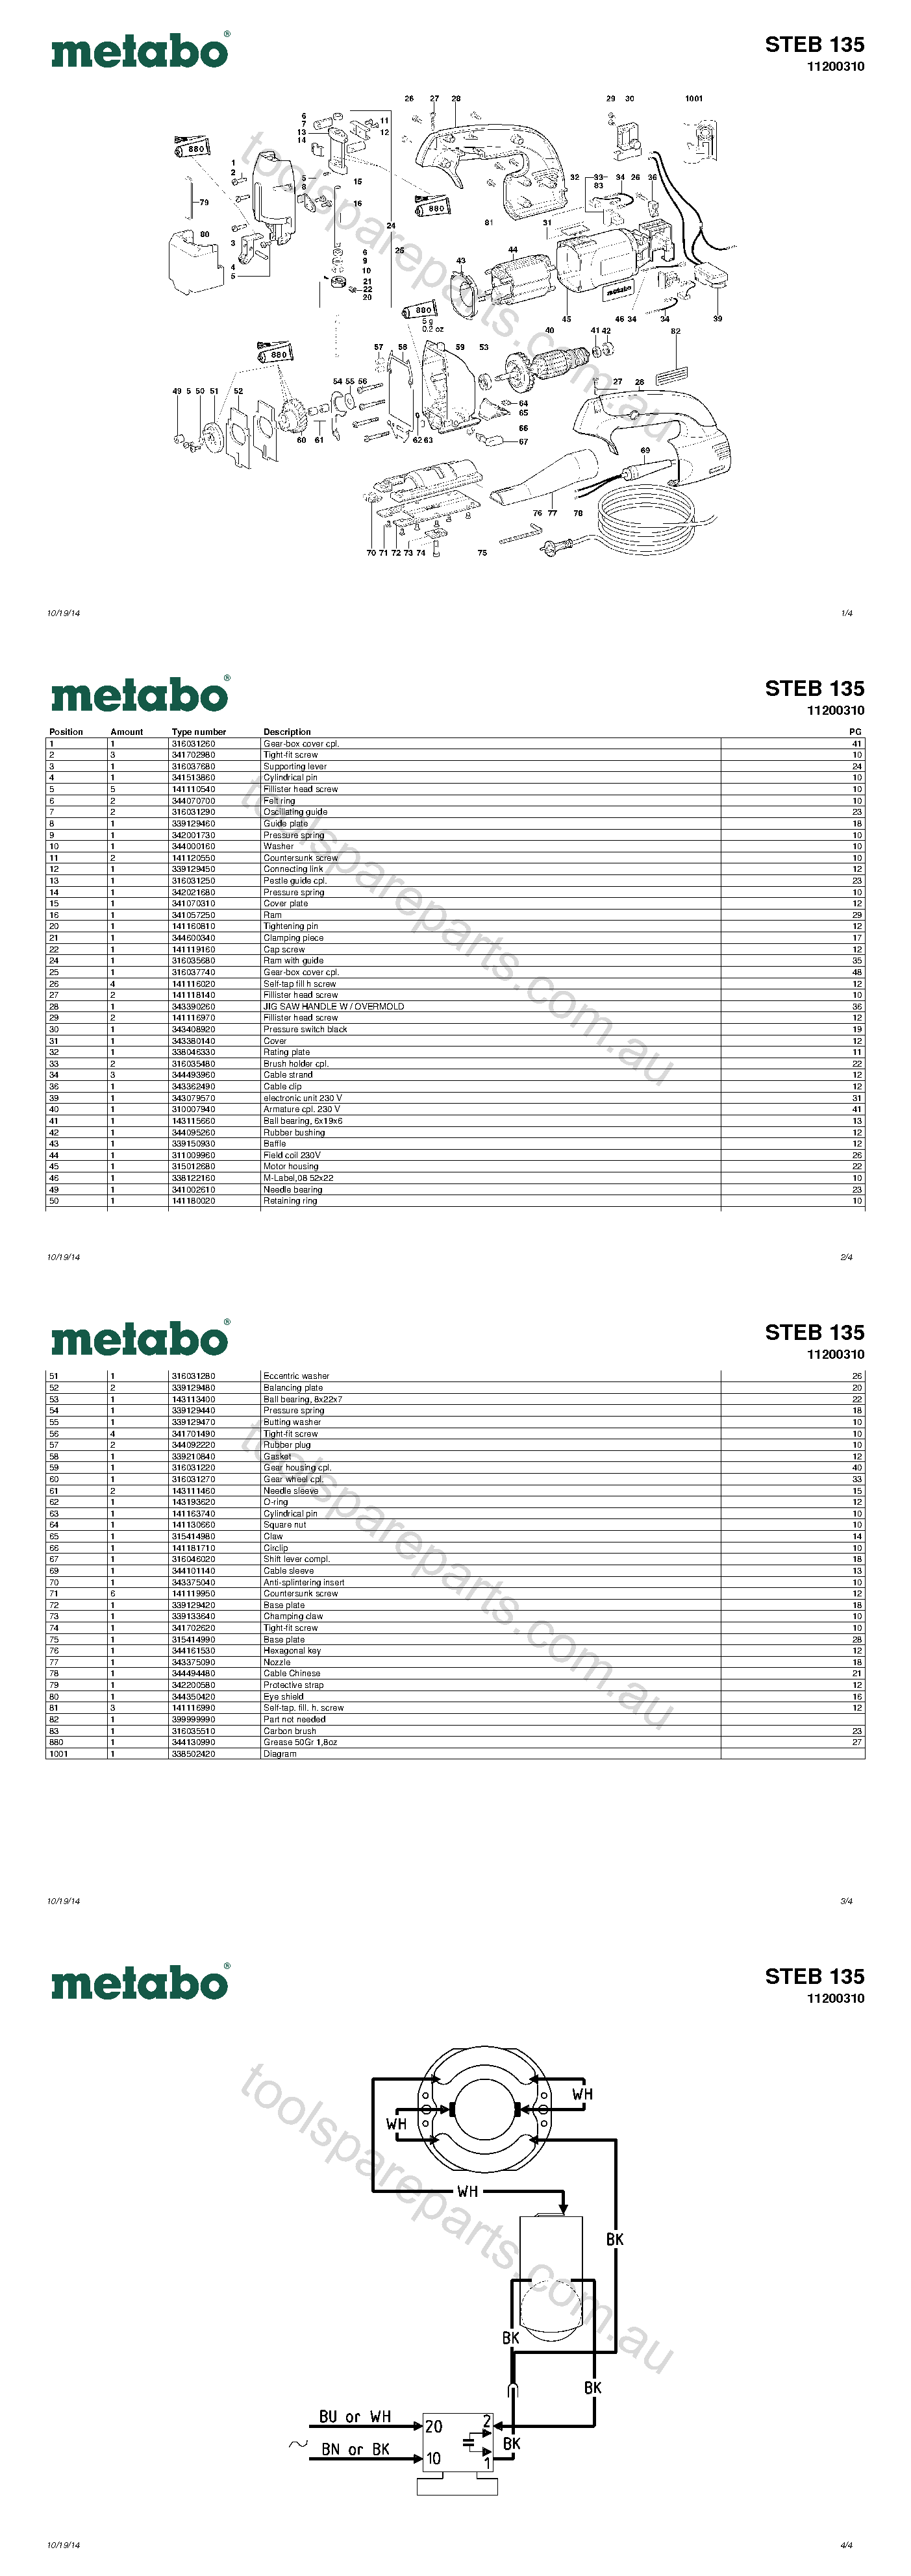 Metabo STEB 135 11200310  Diagram 1